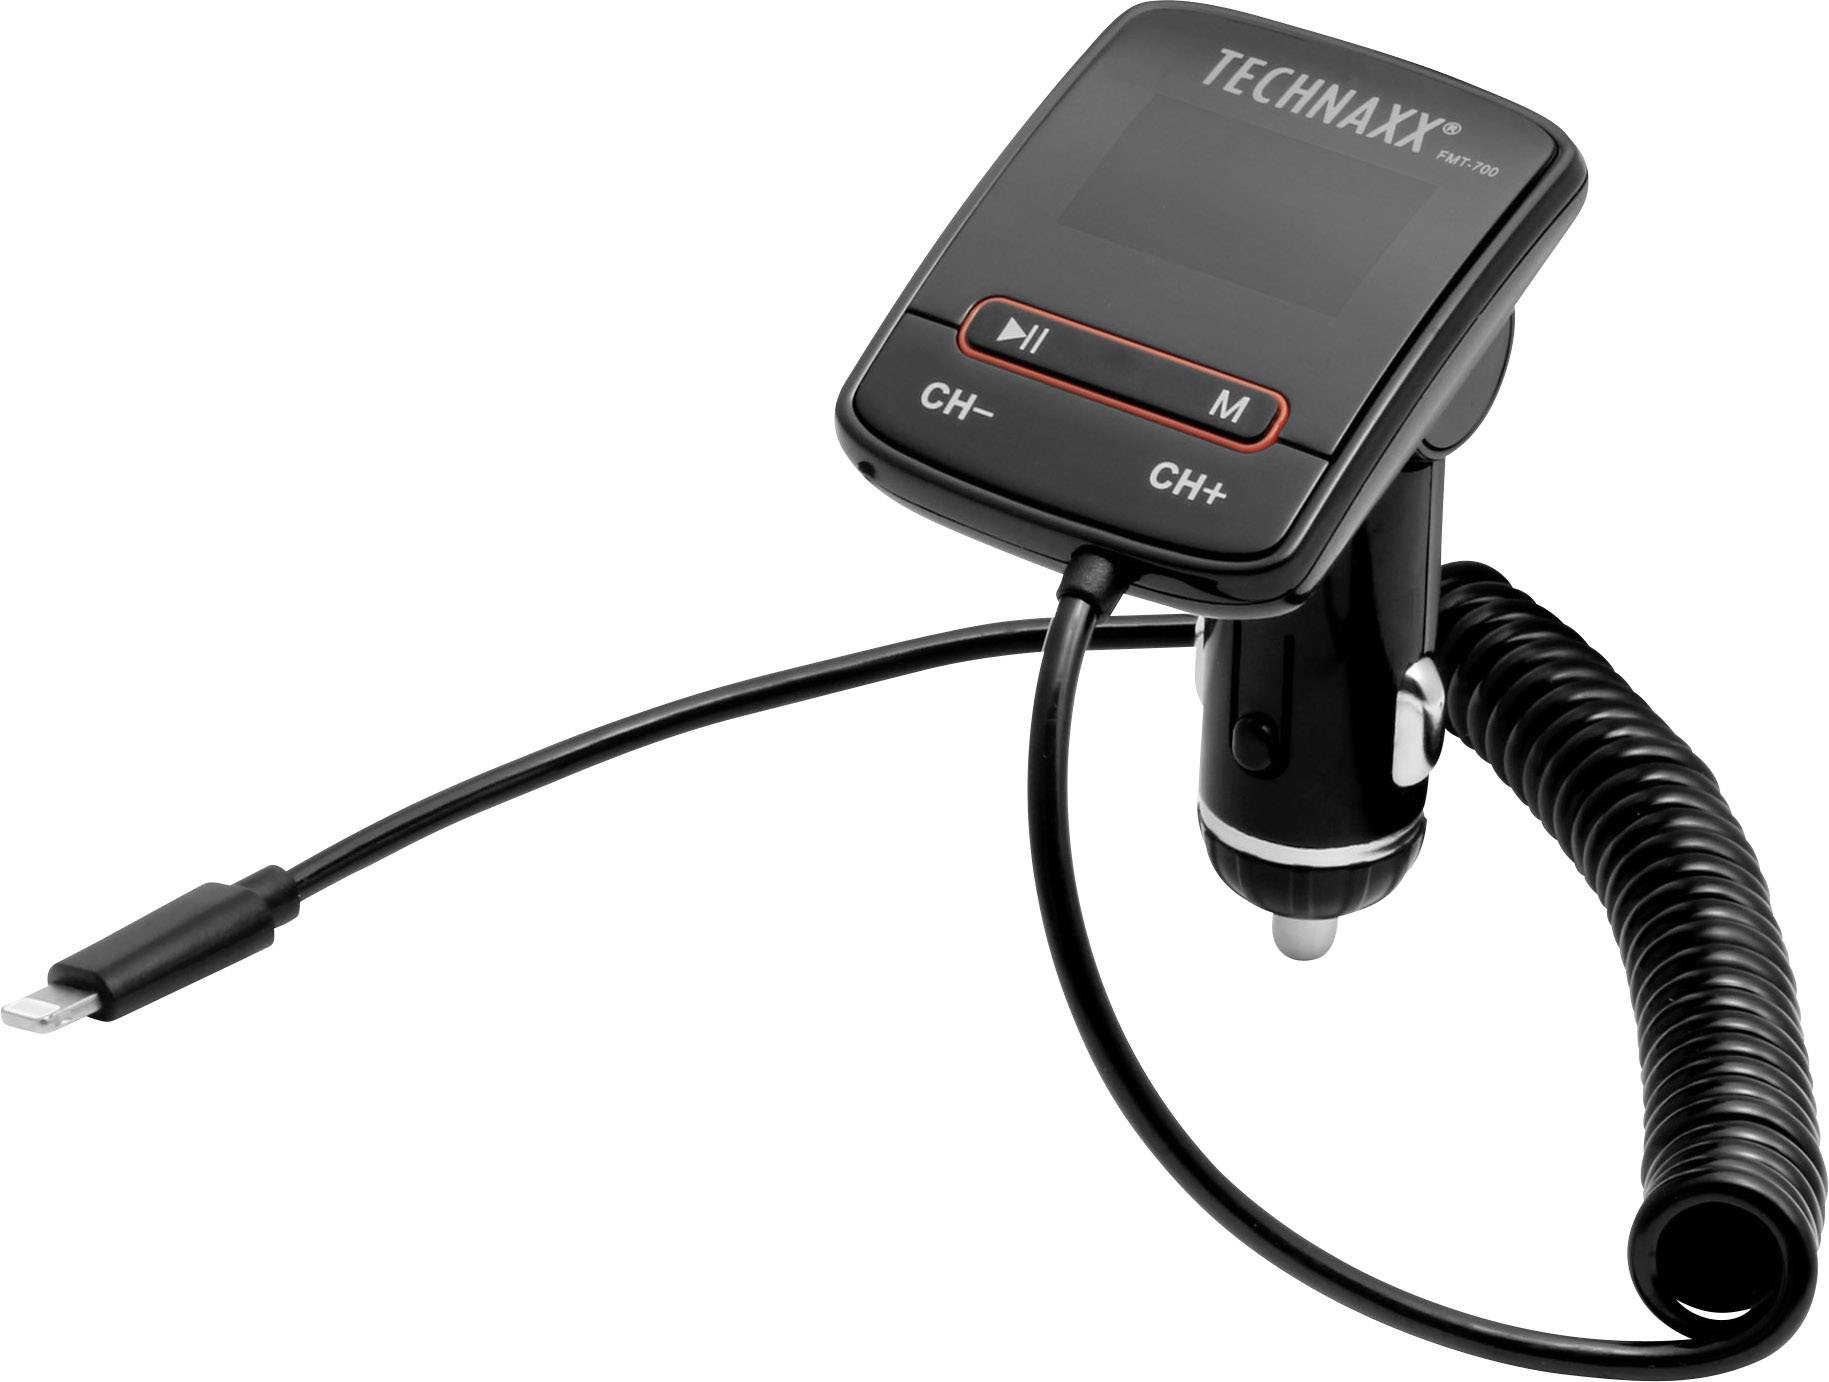 Technaxx FMT700 FM-transmitter laadfunctie voor iPhone, Kogelgewricht | Conrad.nl